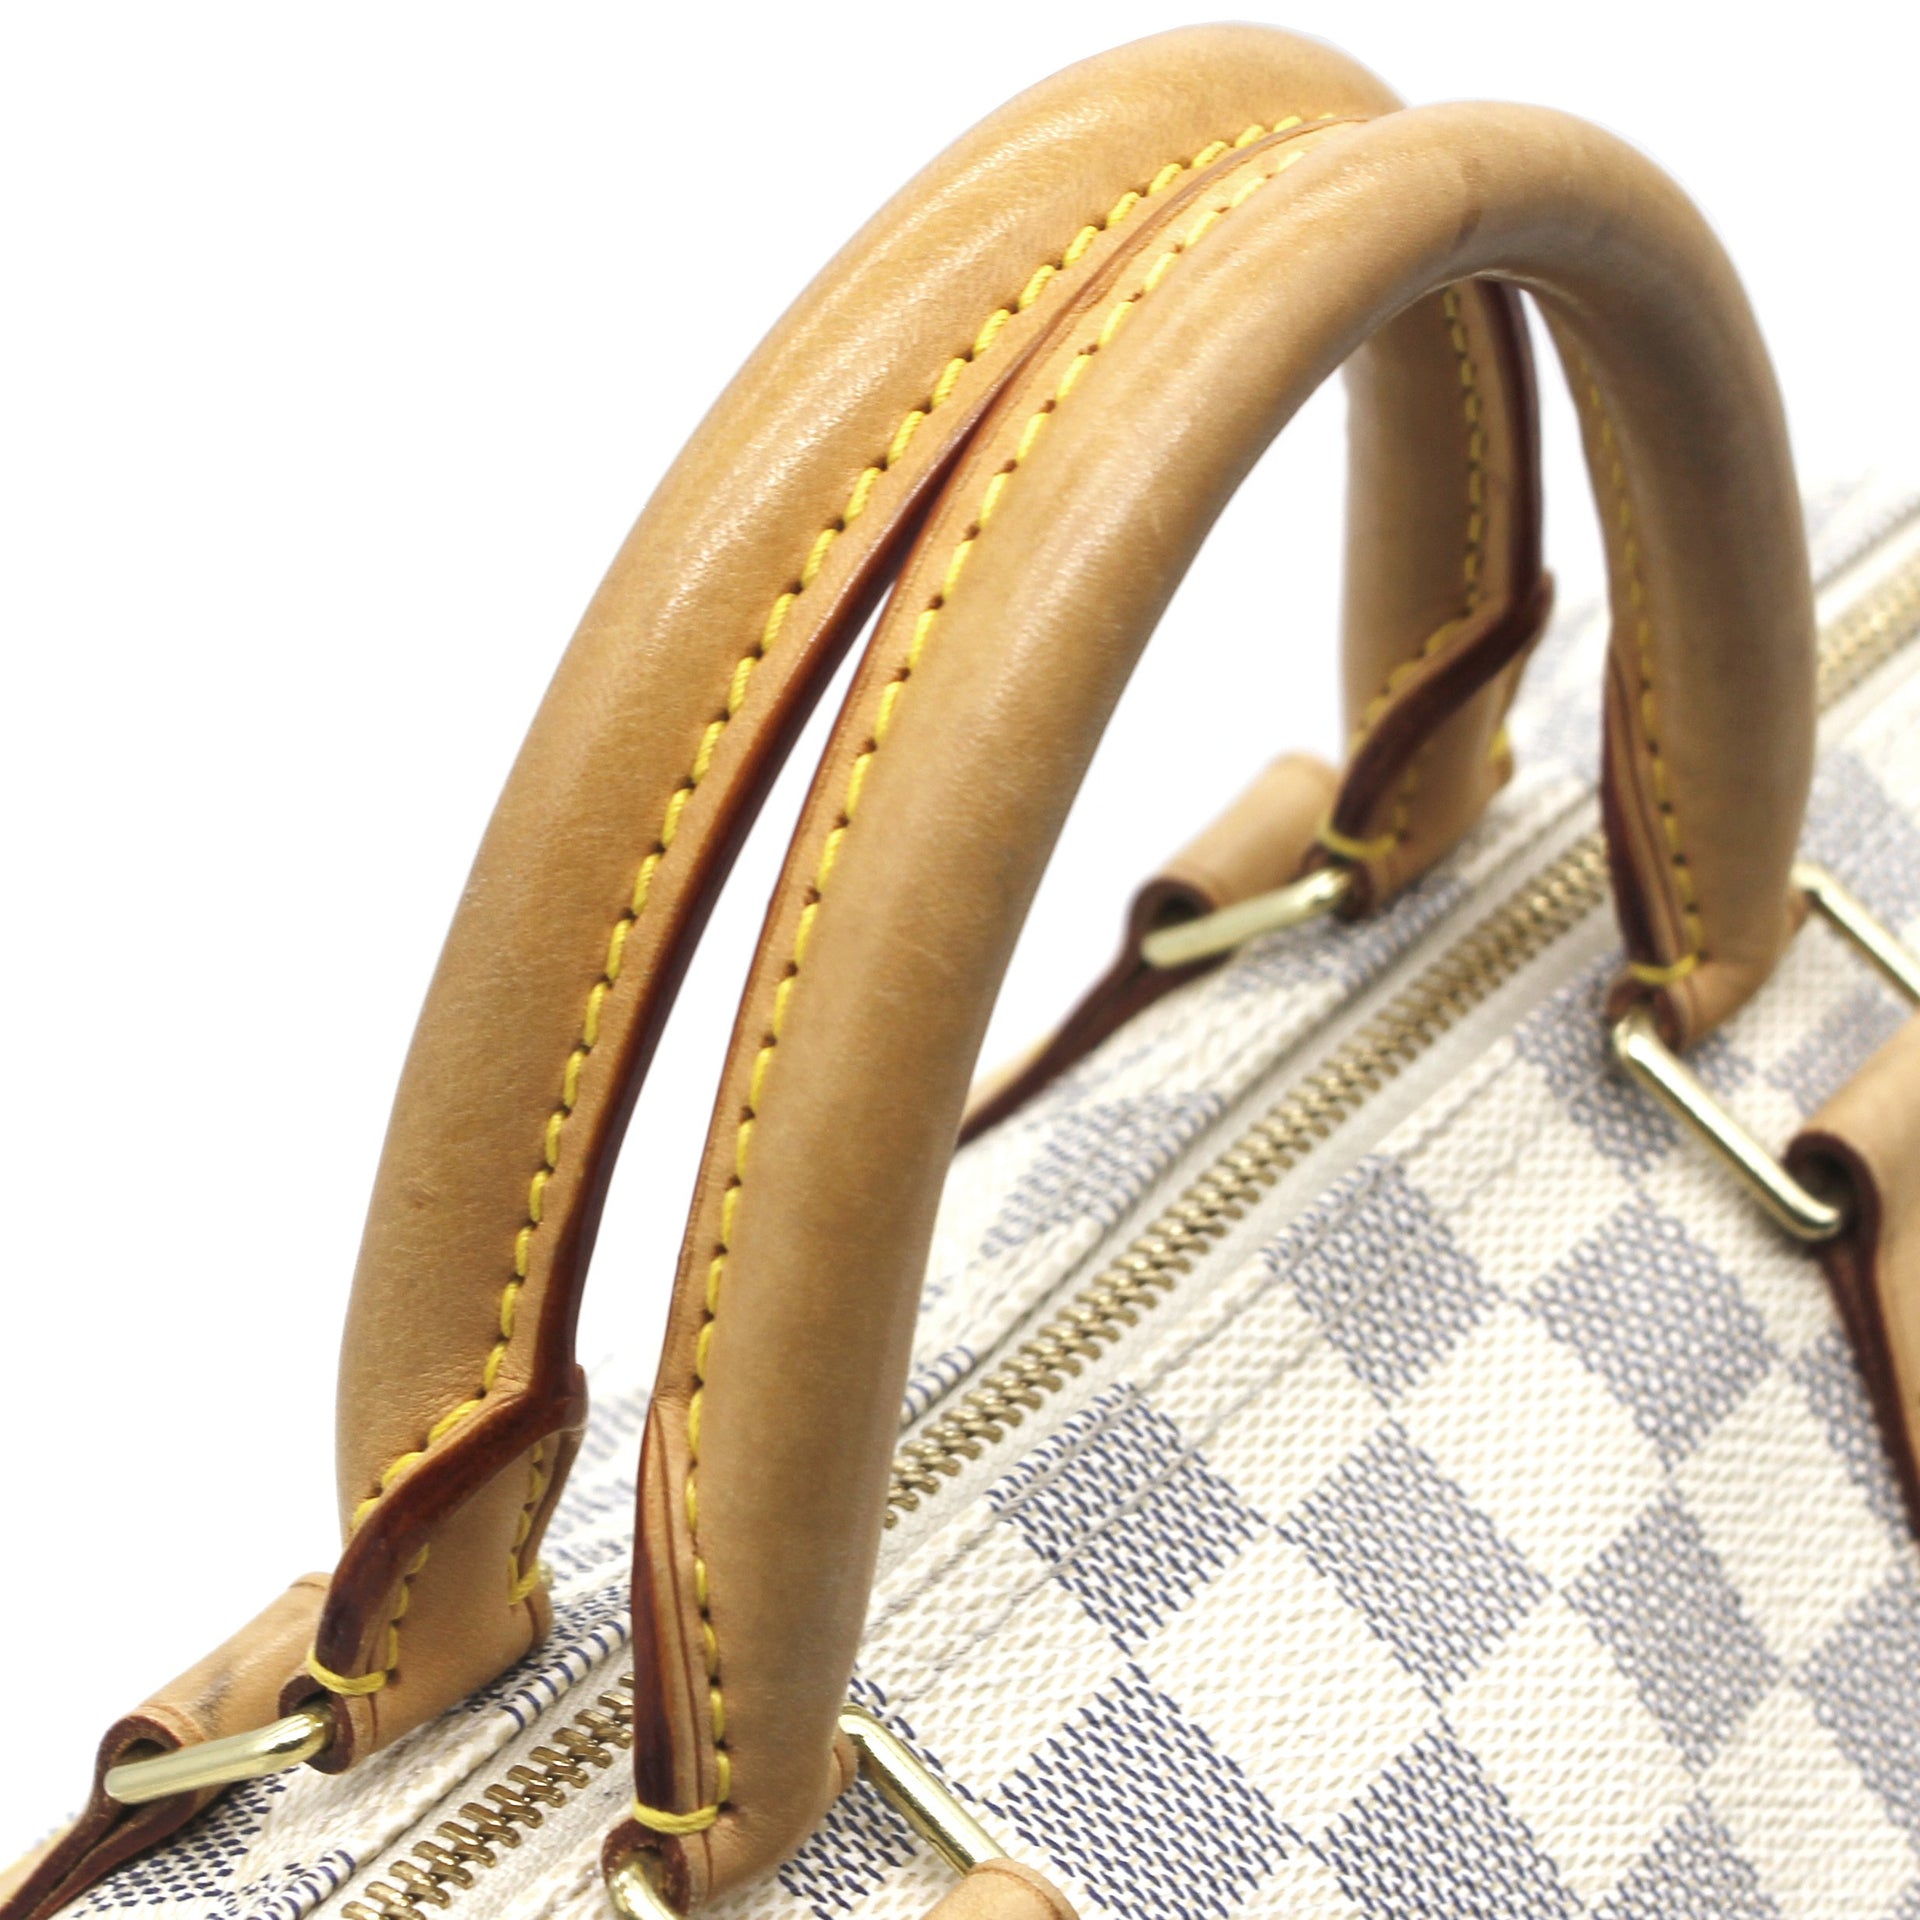 Speedy 25 Damier Azur Canvas - Handbags